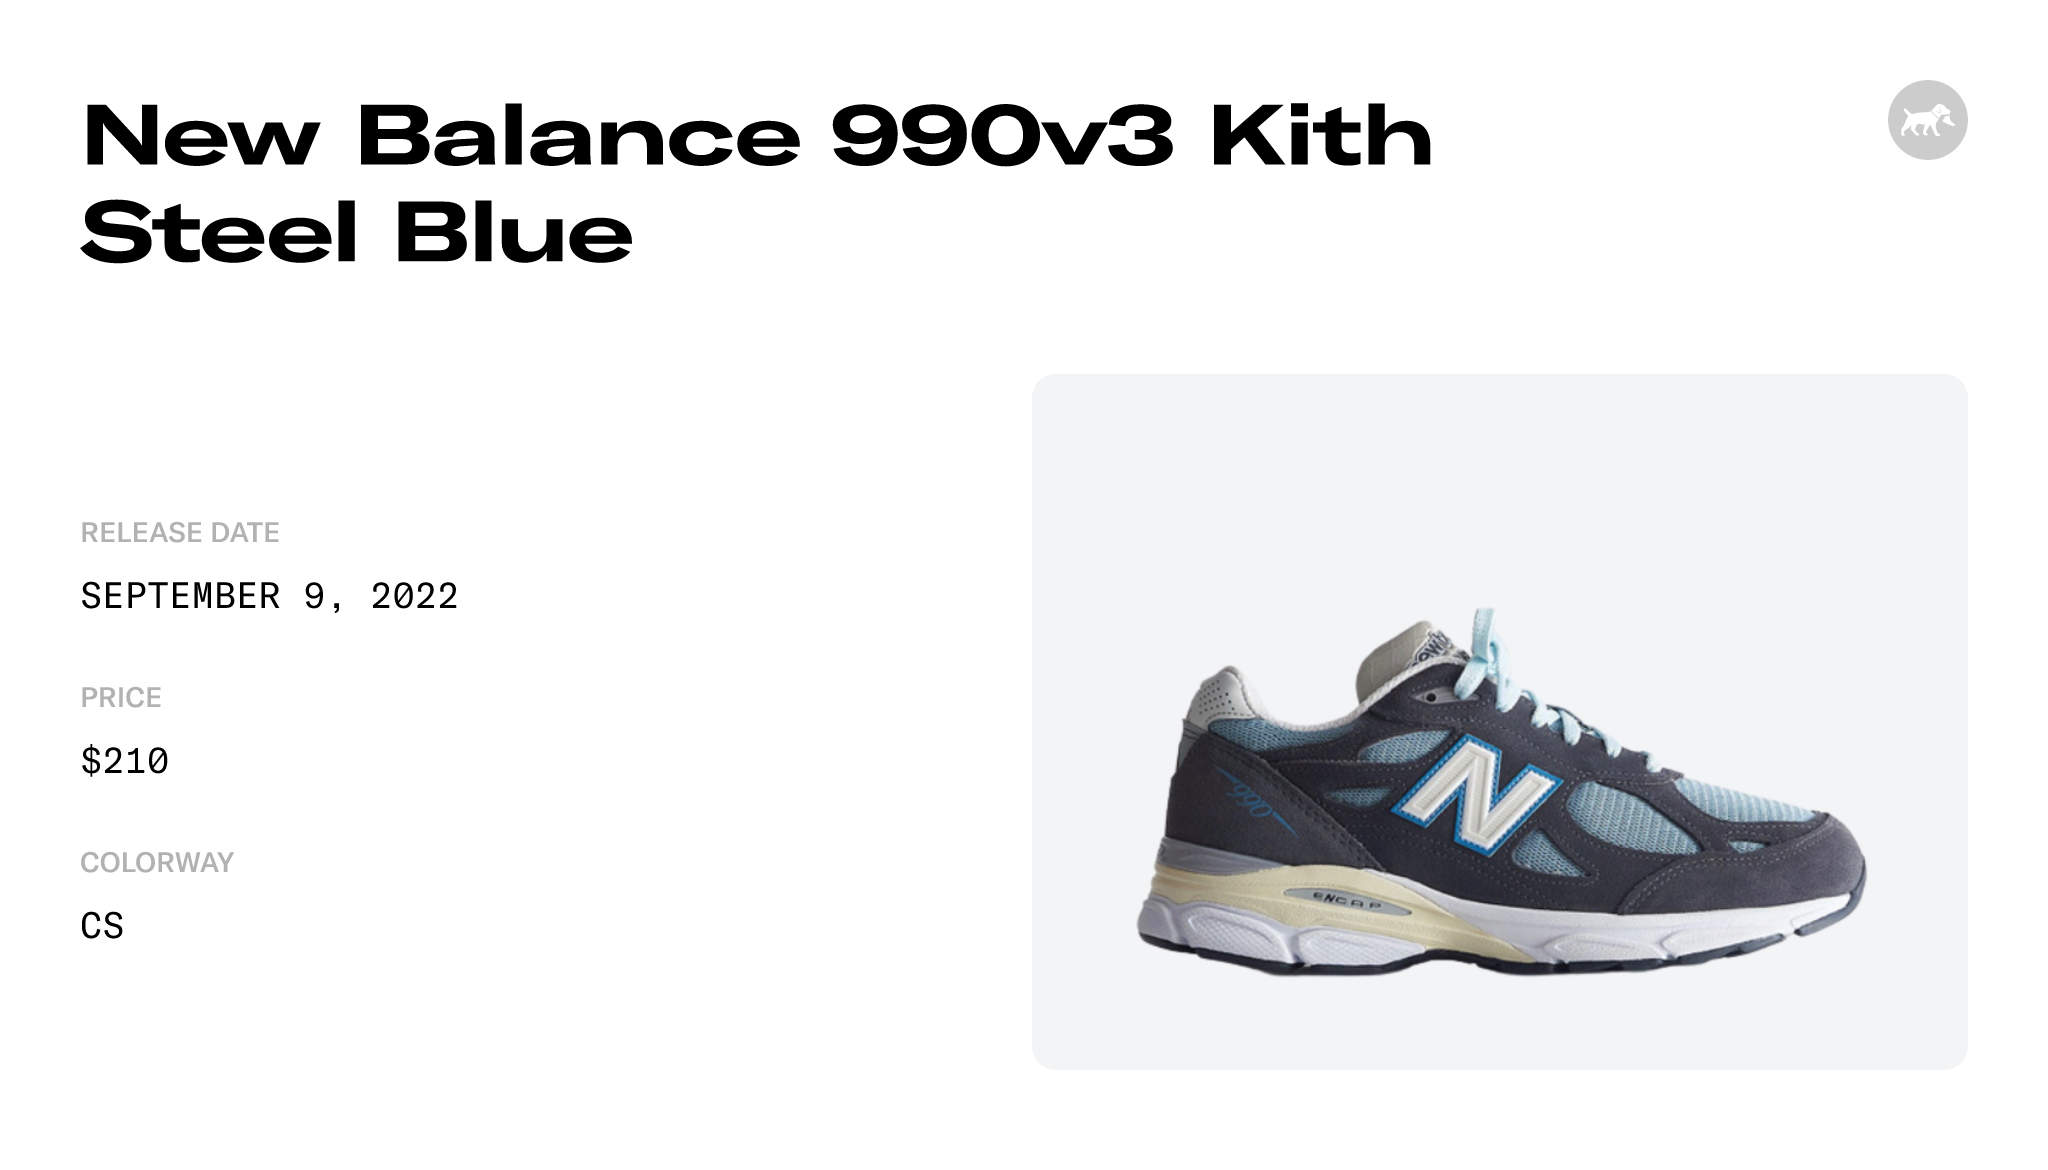 New Balance 990v3 Kith Steel Blue - NBM990KS3 Raffles and Release Date